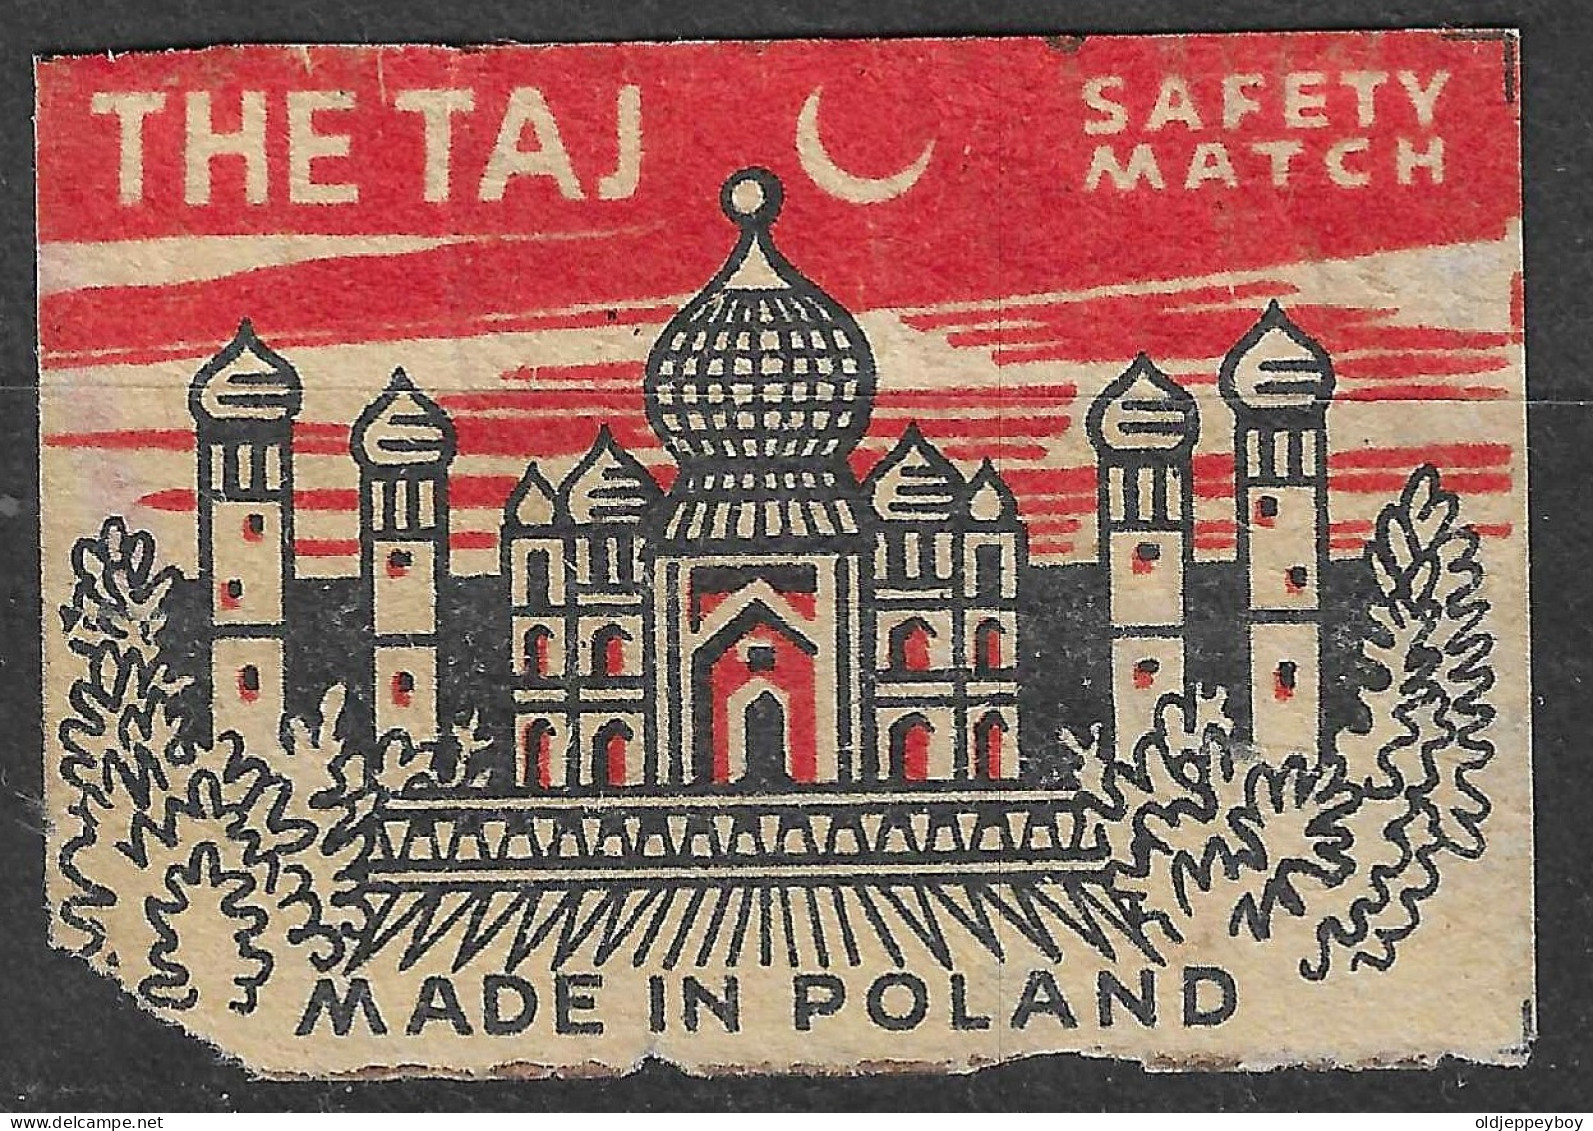  Phillumeny MATCHBOX LABEL Made In Poland, 1950’s/1960’s  THE TAJ MAHAL  3.5 X 5 Cm - Zündholzschachteletiketten